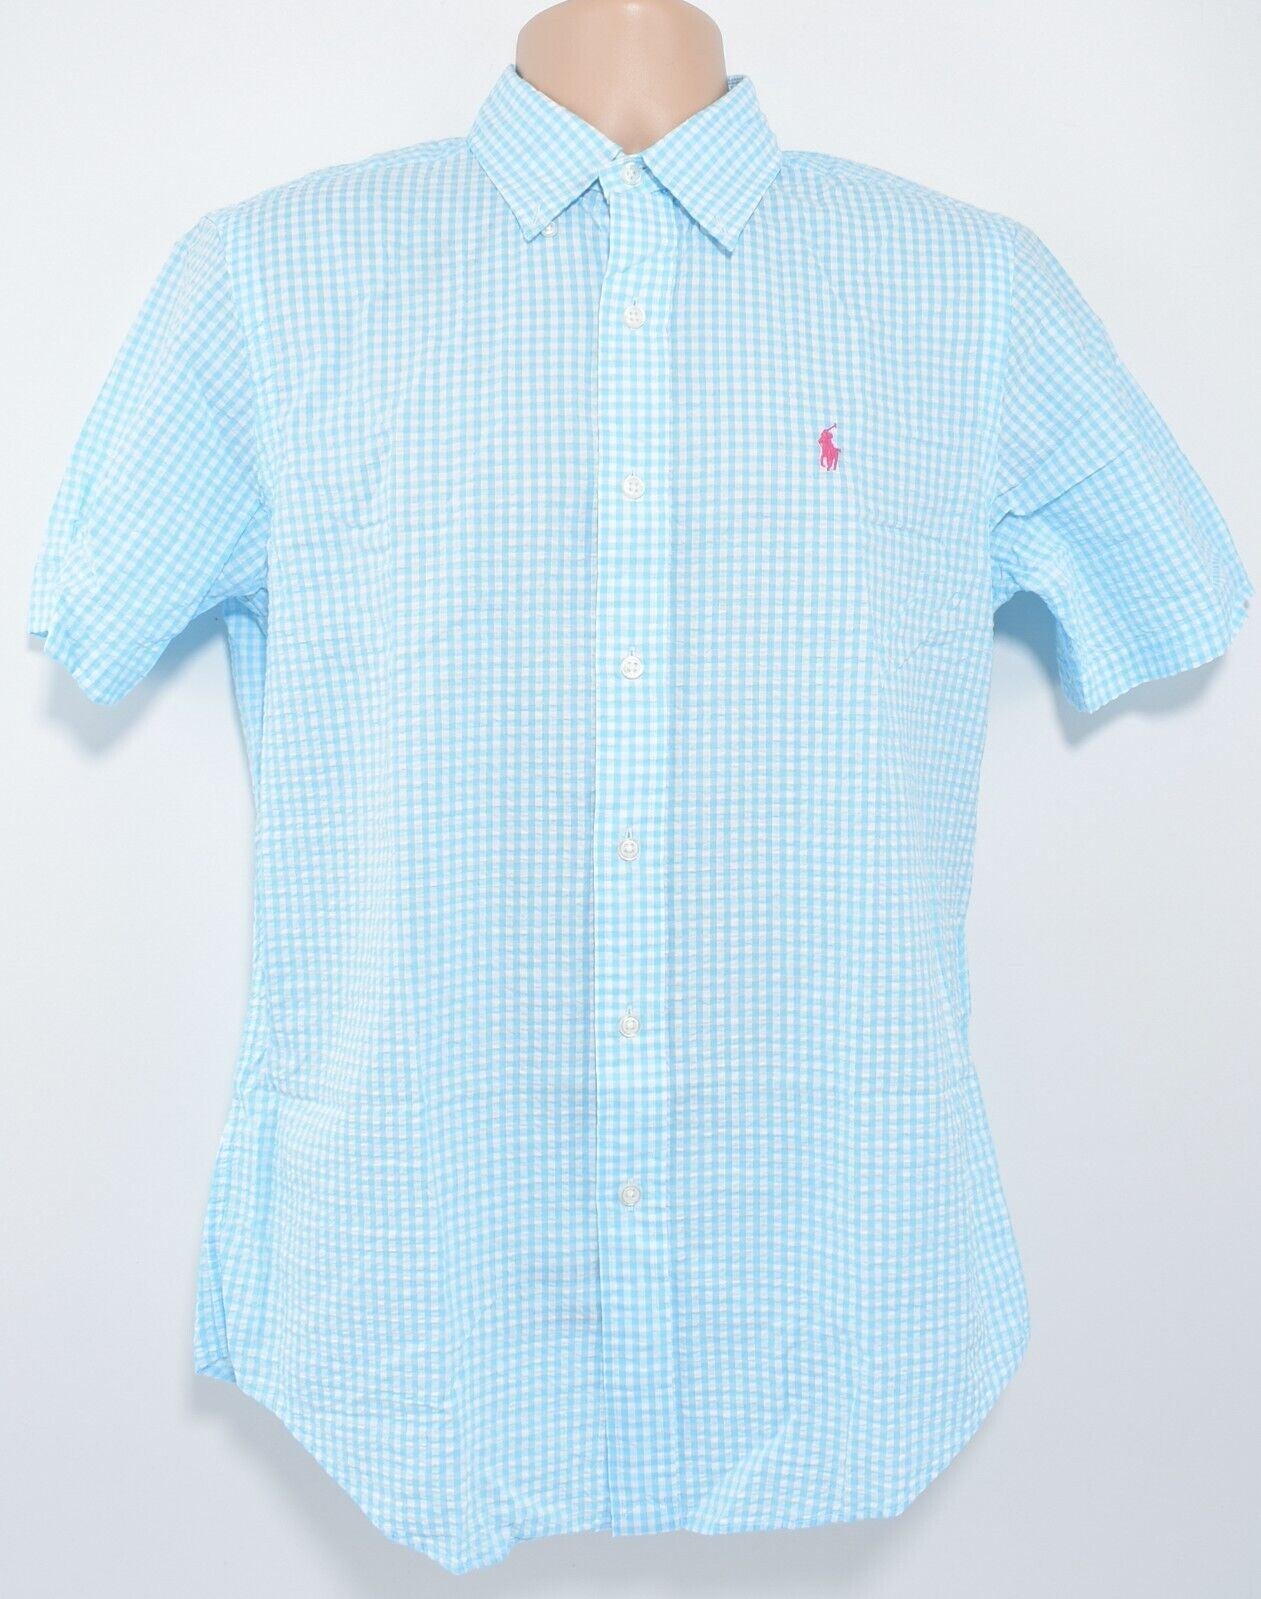 POLO RALPH LAUREN Mens Seersucker Short Sleeve Shirt, Turquoise/Checked, size S